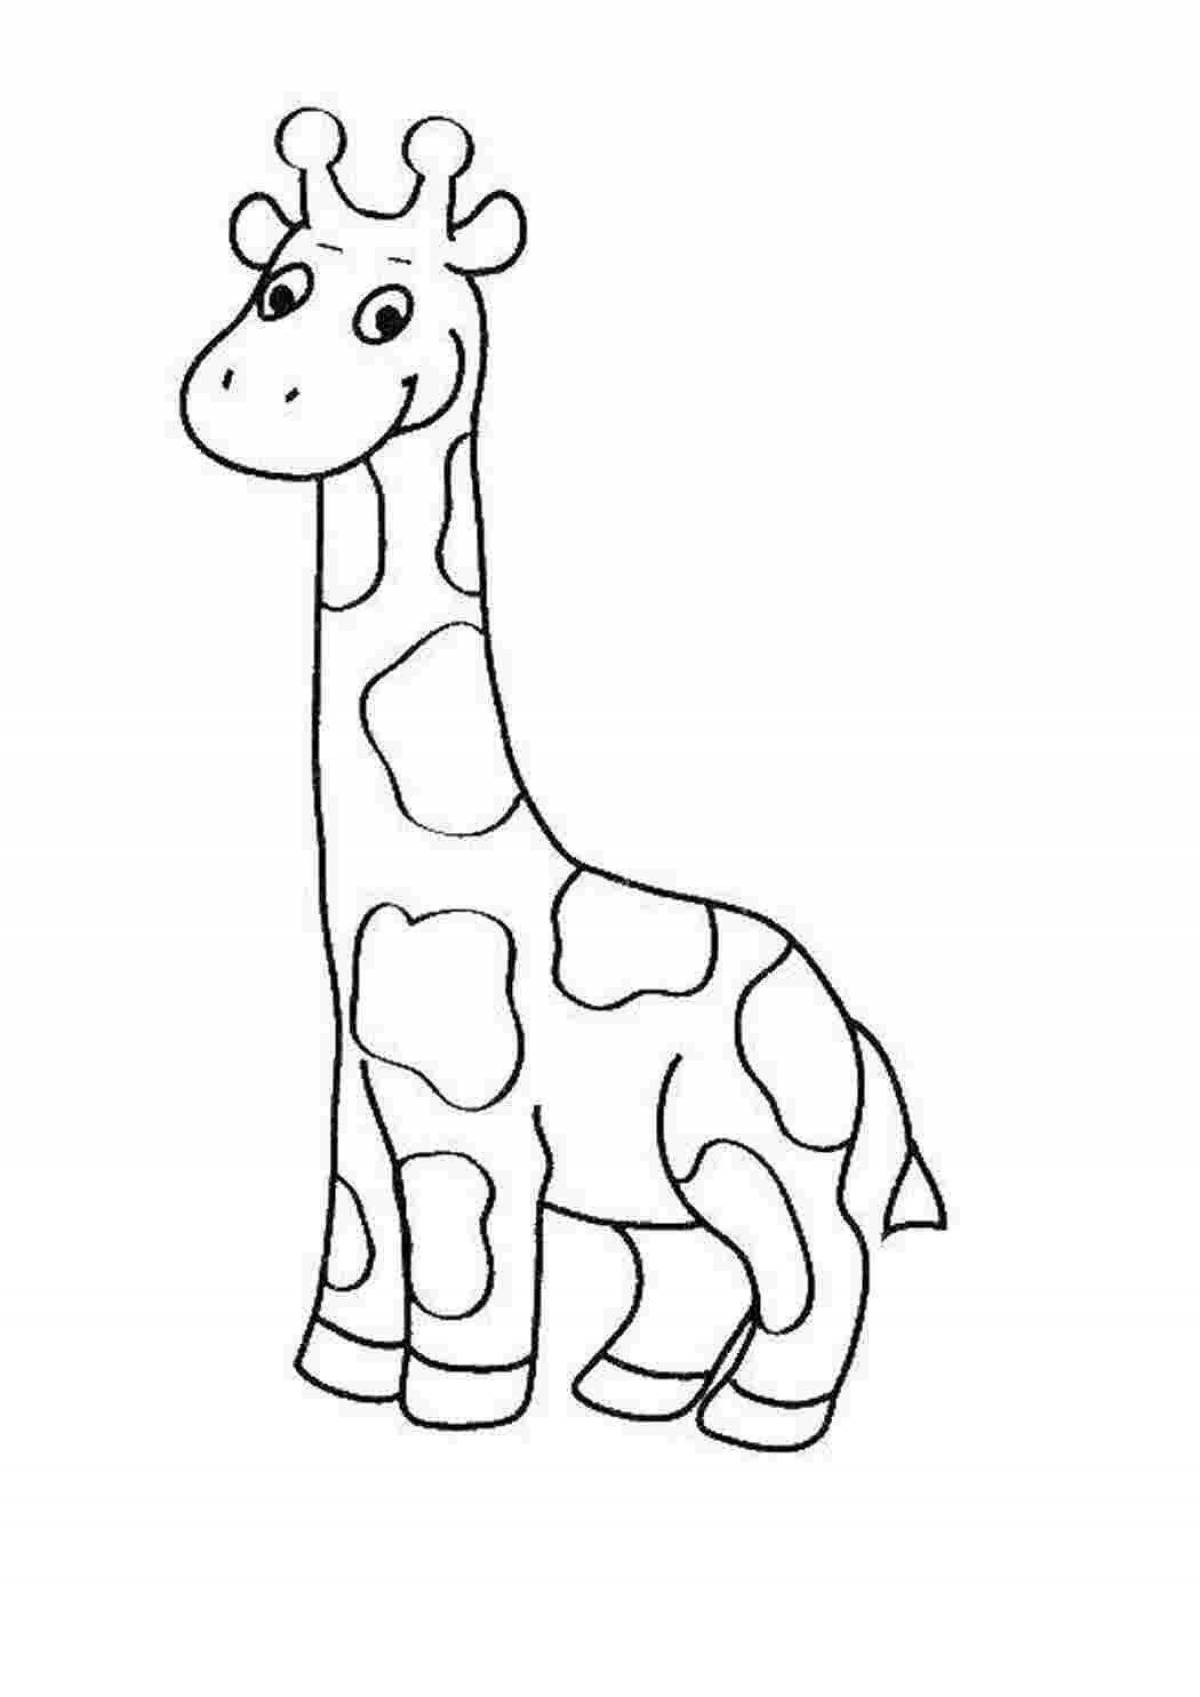 Coloring page dazzling giraffe